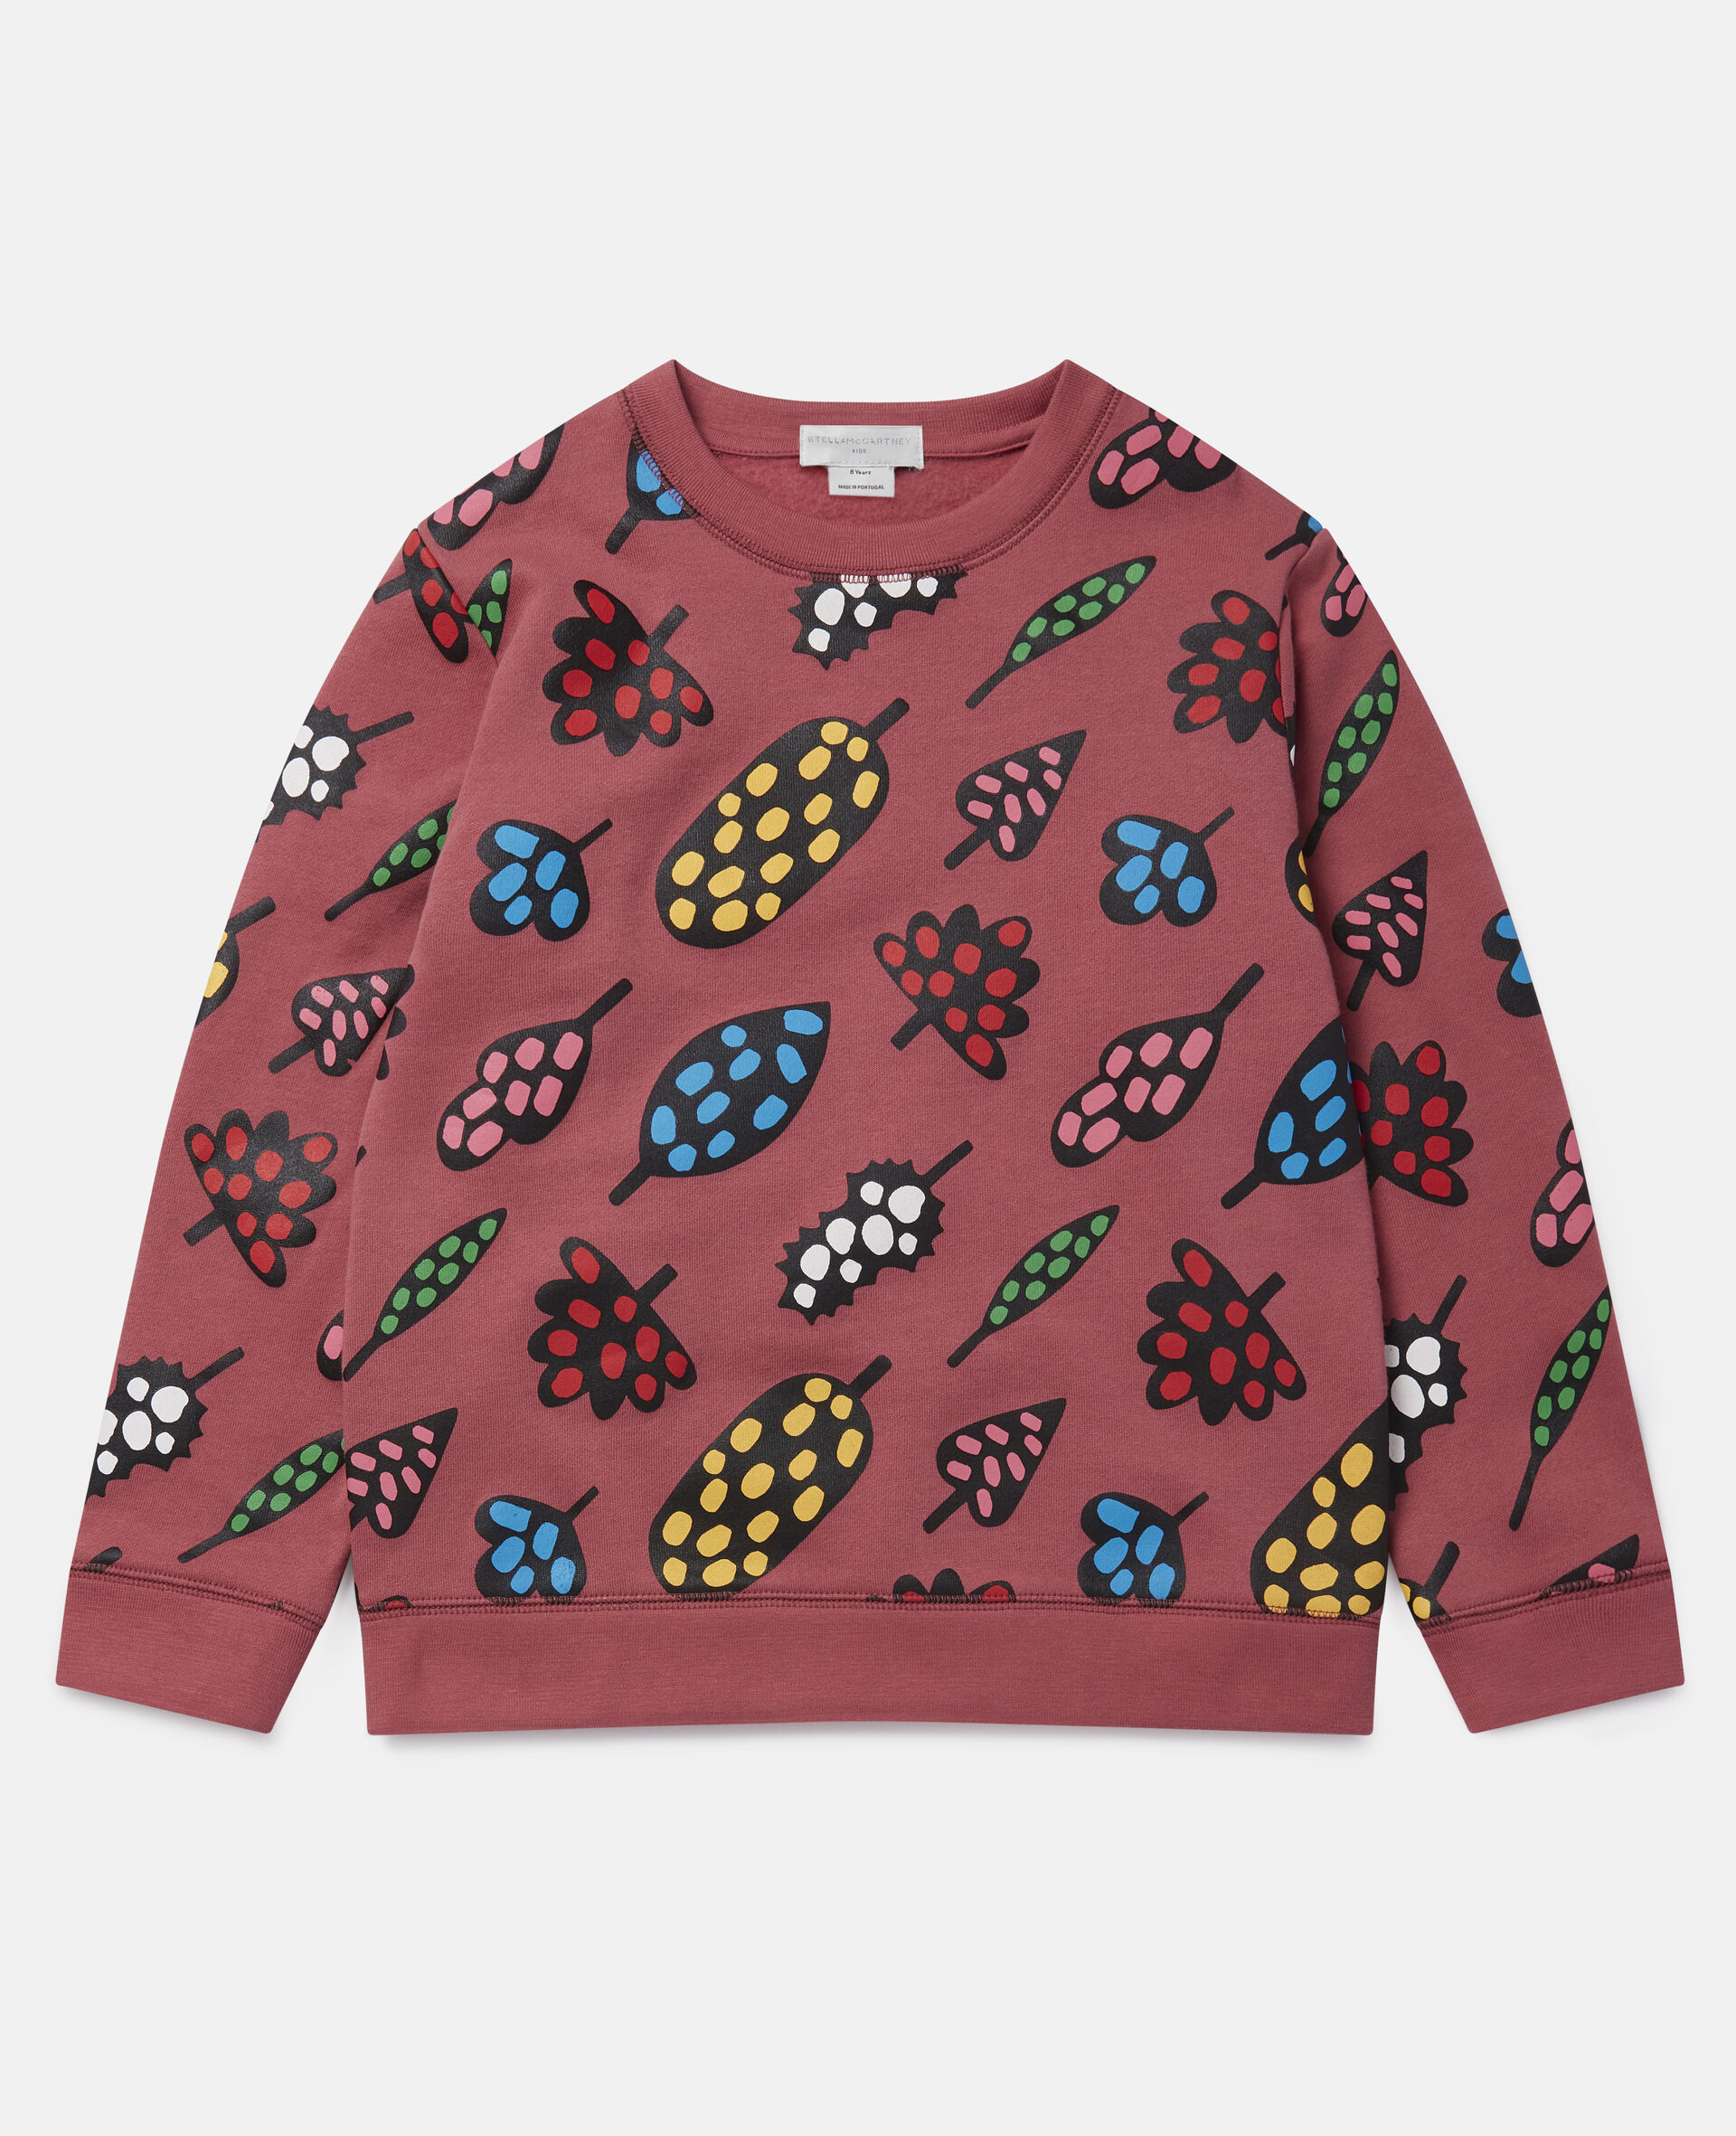 Spotty Leaves Cotton Fleece Sweatshirt -Multicolour-large image number 0